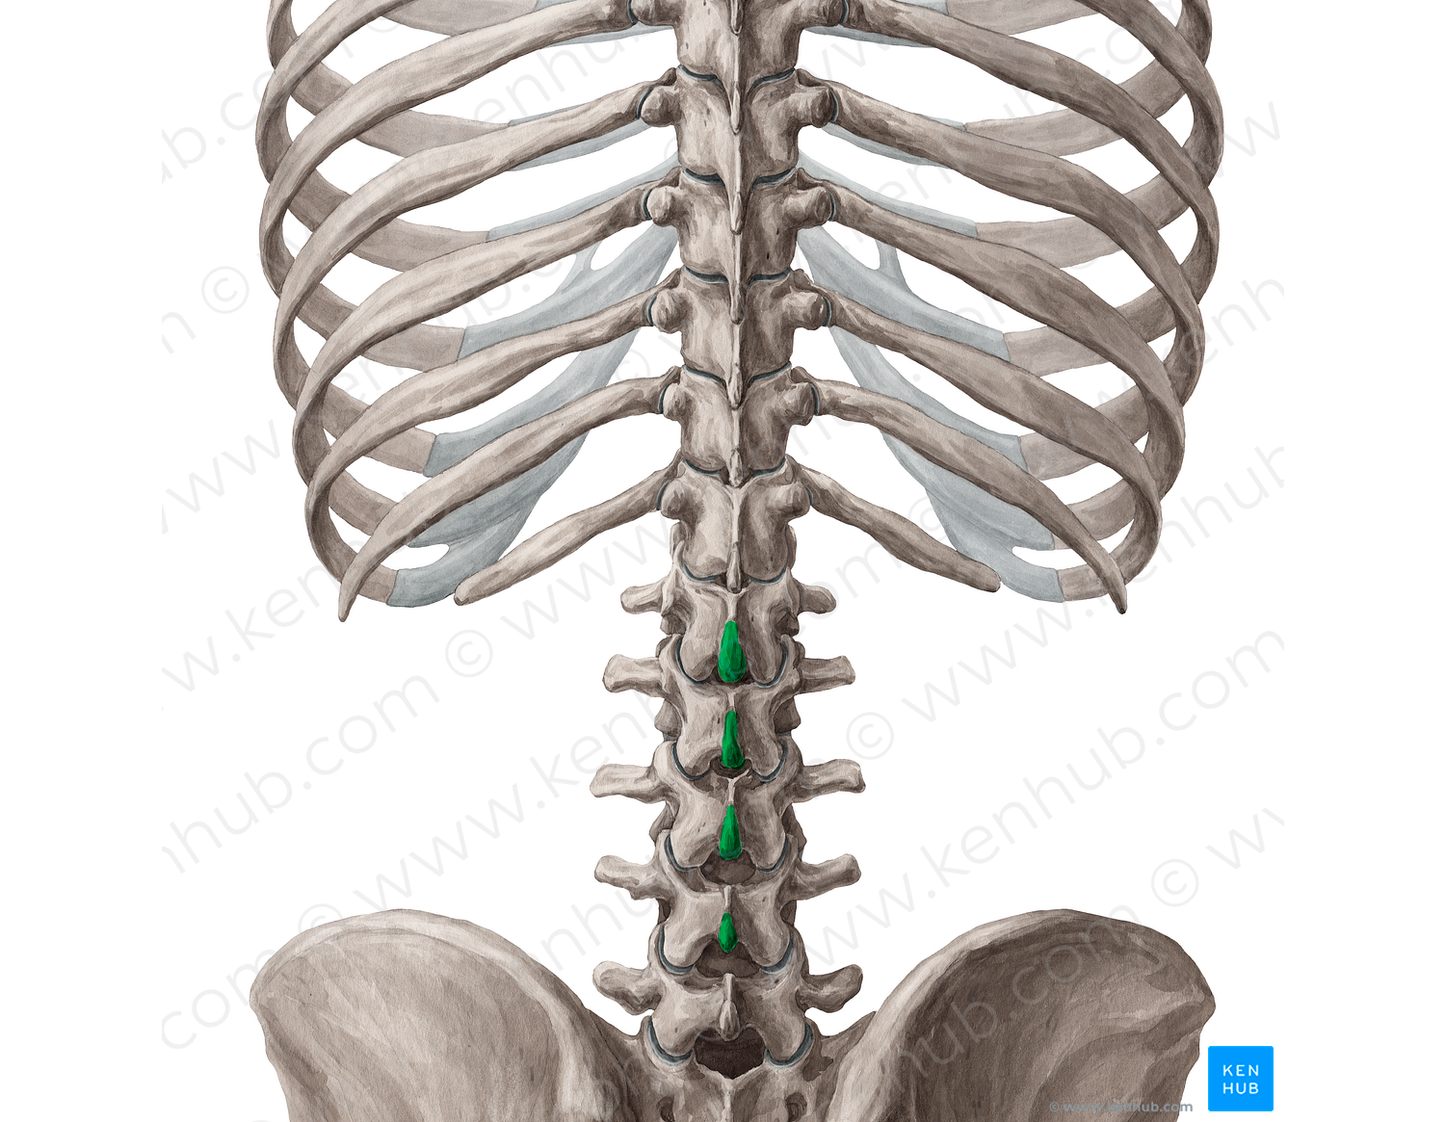 Spinous processes of vertebrae L1-L4 (#18539)